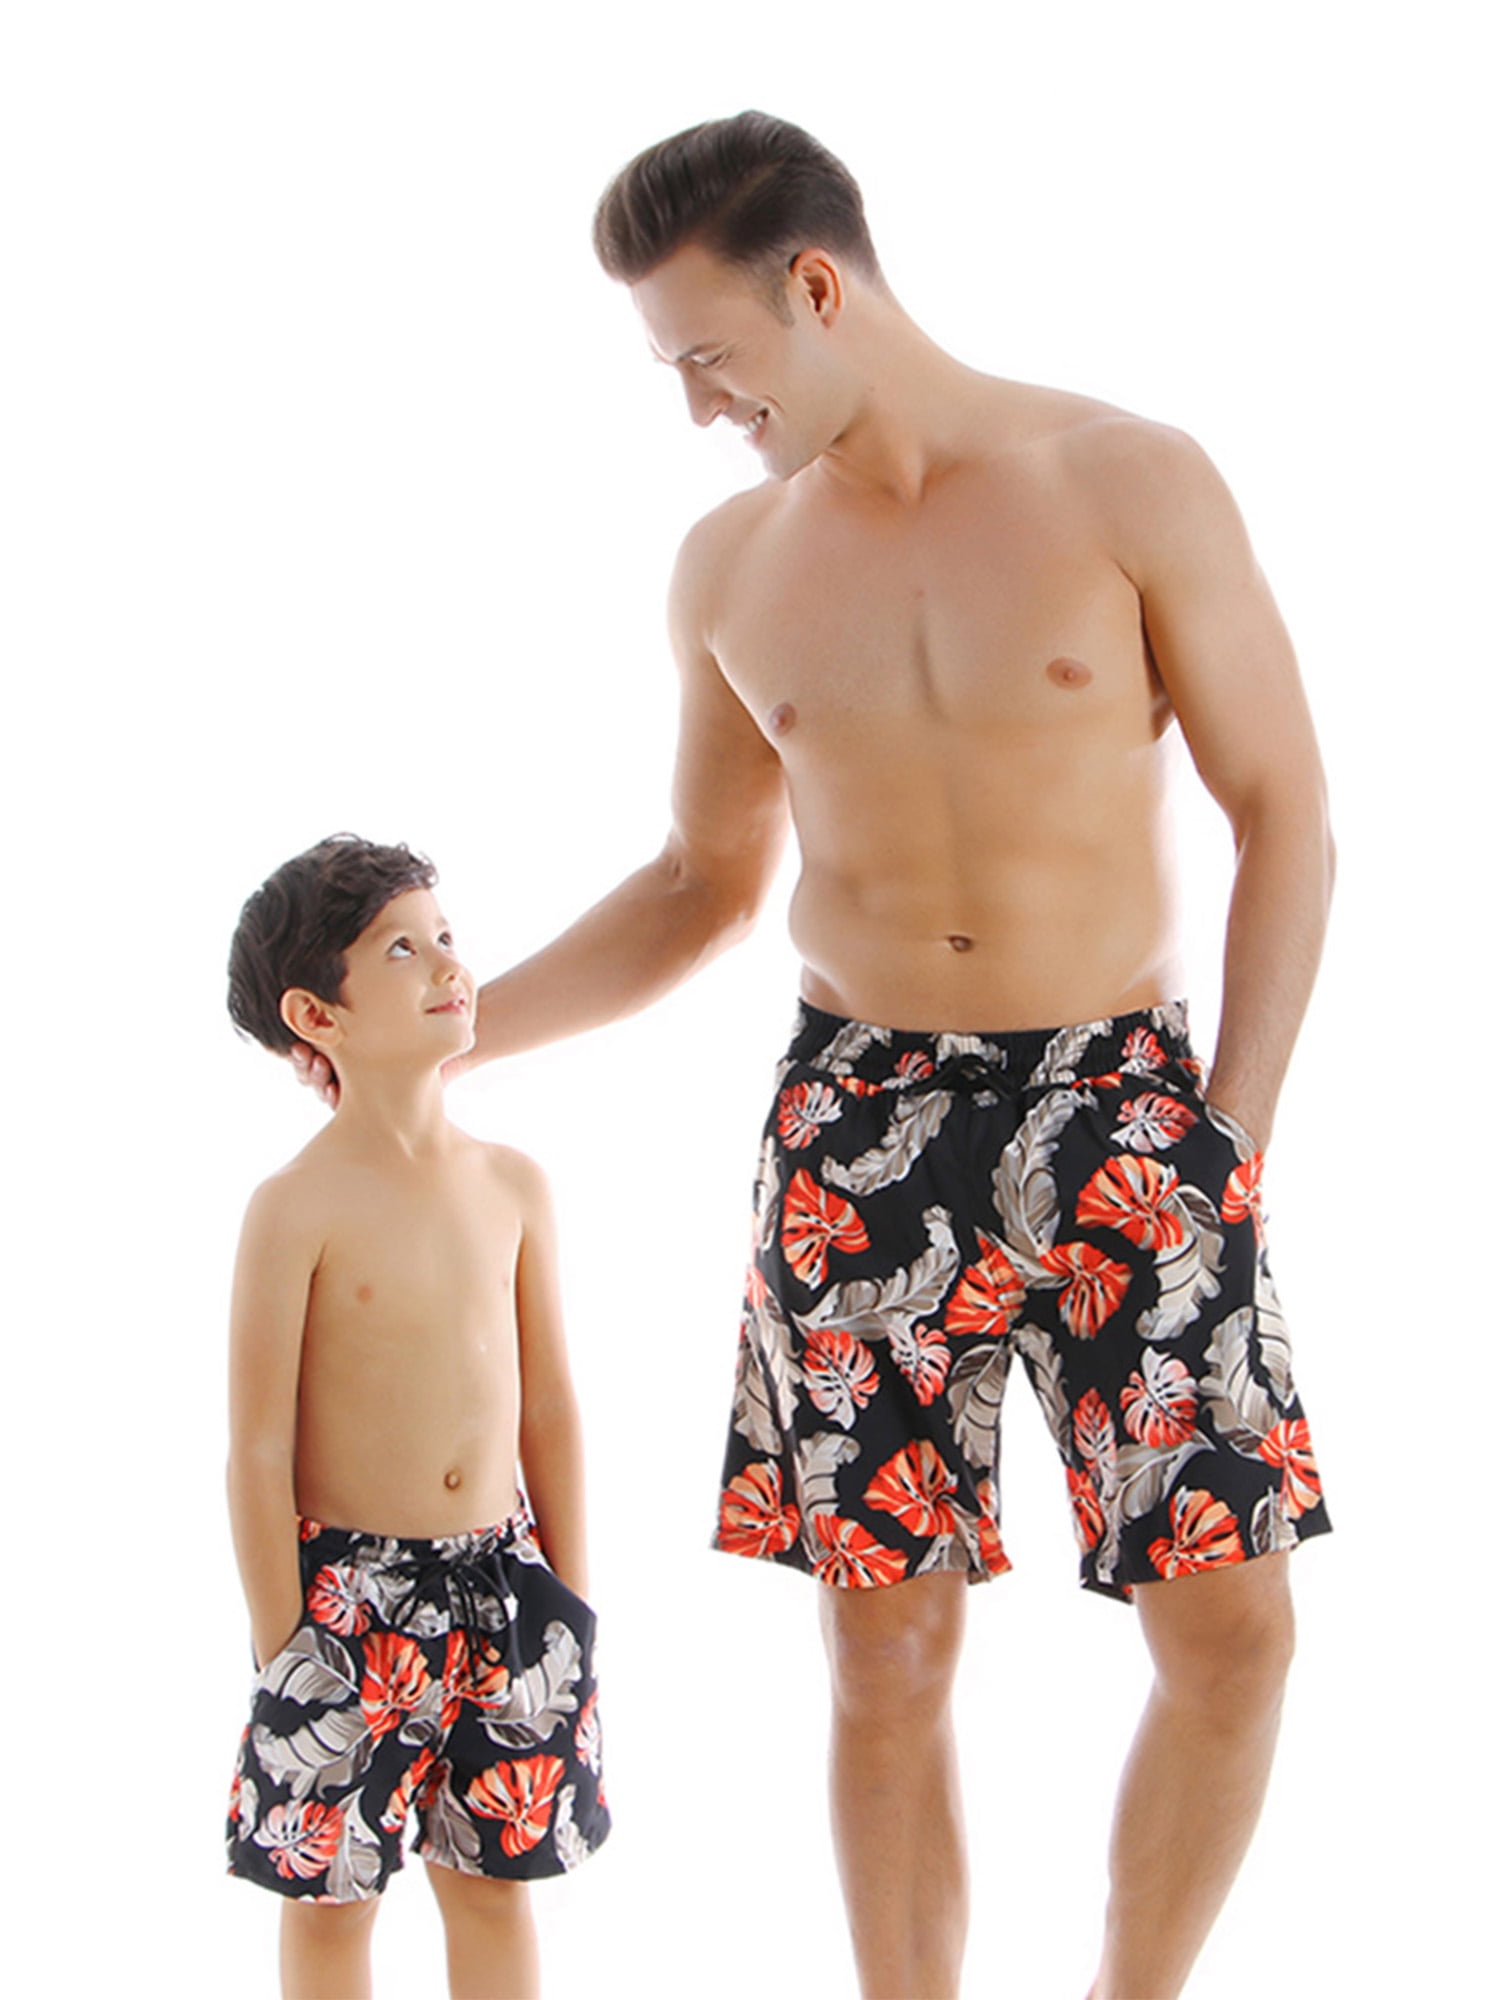 Family Matching Swimwear summer shorts beach shorts pool party shorts Matching Family Bathing shorts son and dad shorts